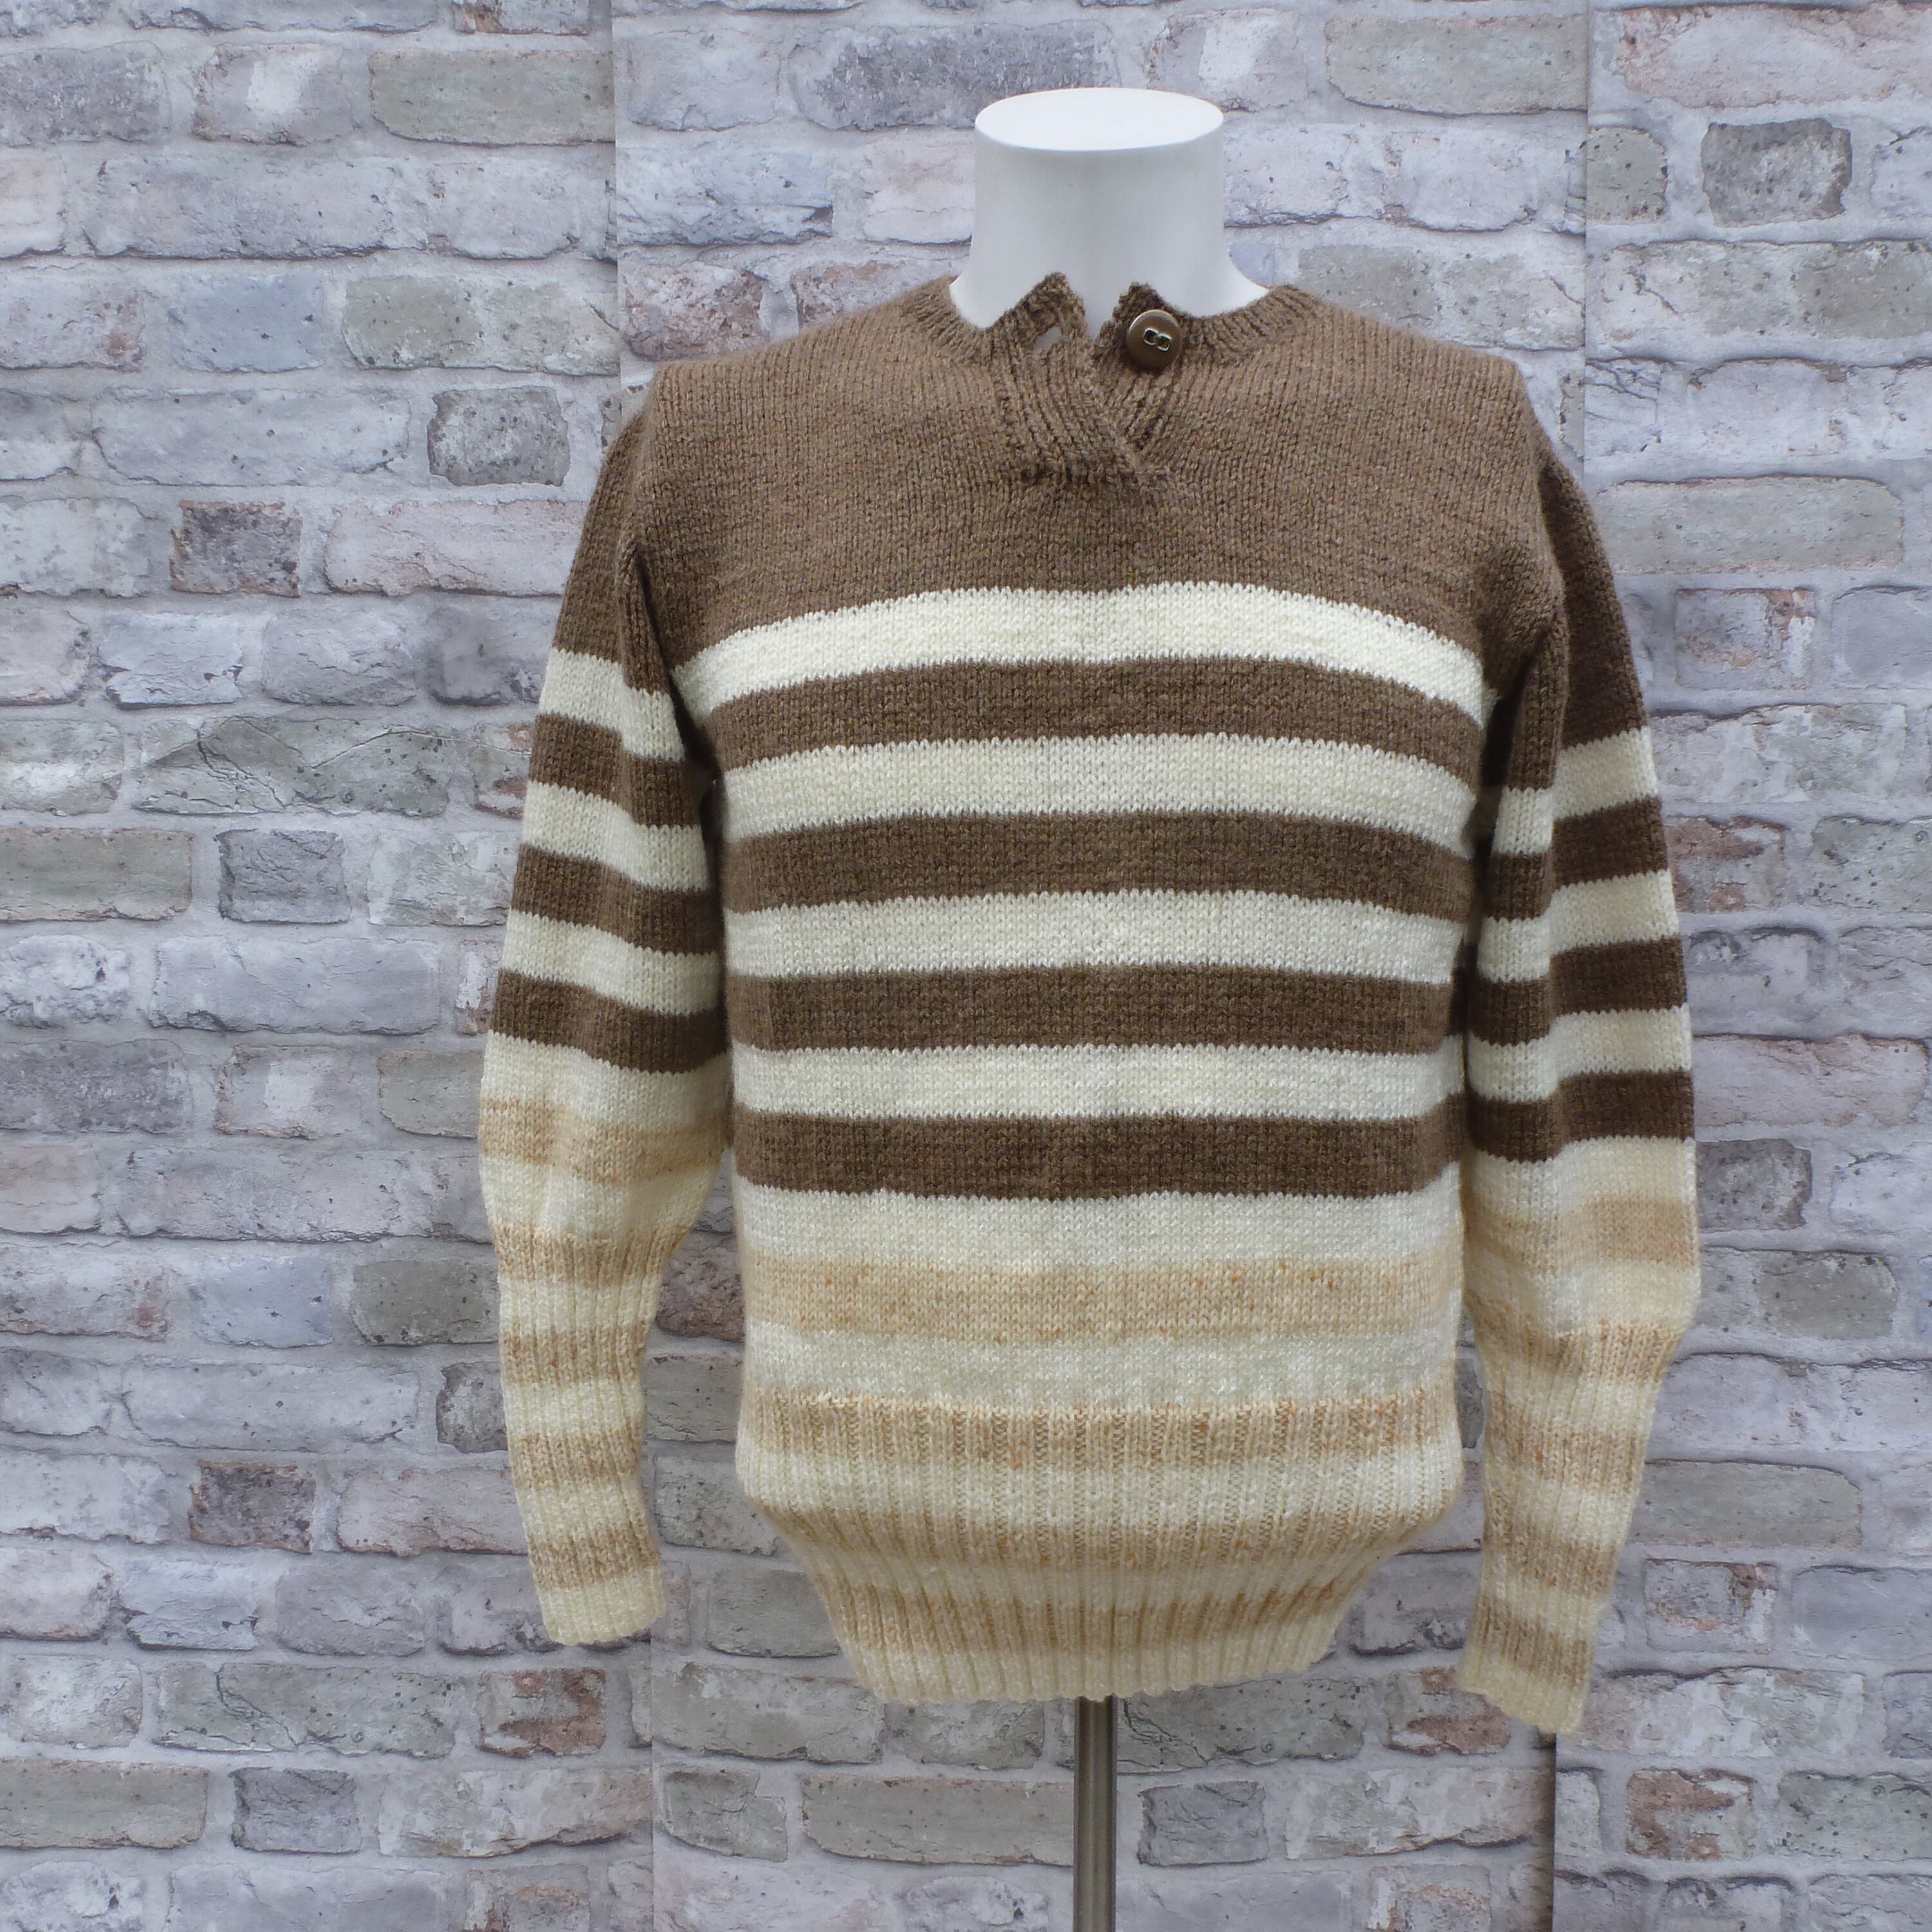 Jumper Knit Sweater Vintage Clothing British 80s Handknit Top - Etsy